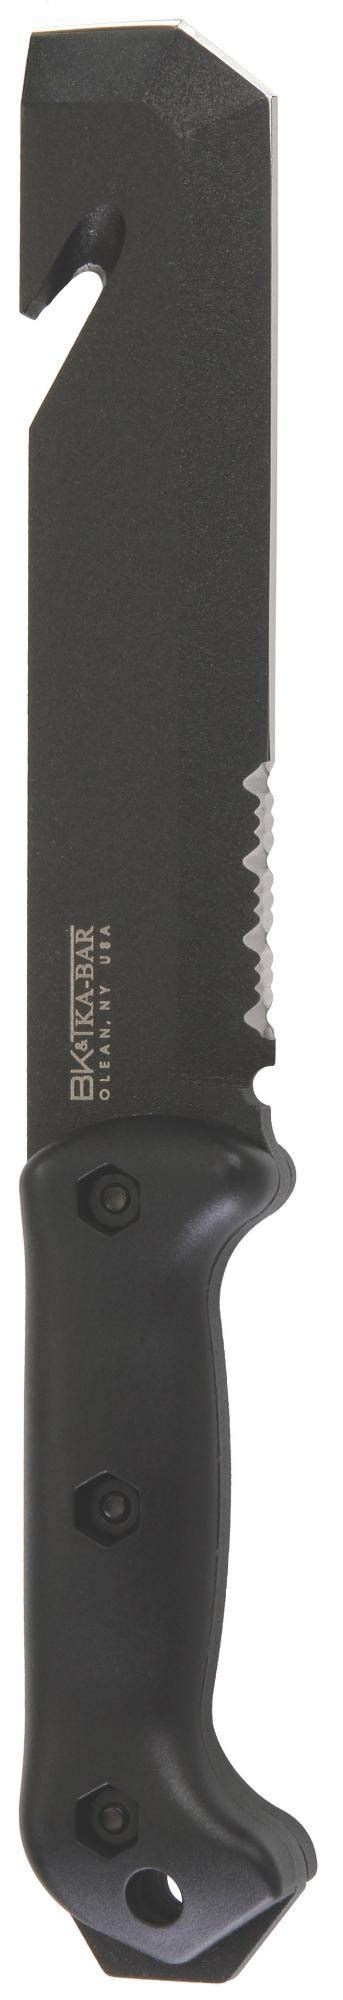 Ka Bar Bk3 Becker Tac Tool 7 Carbon Steel Blade Rescue And Tactical